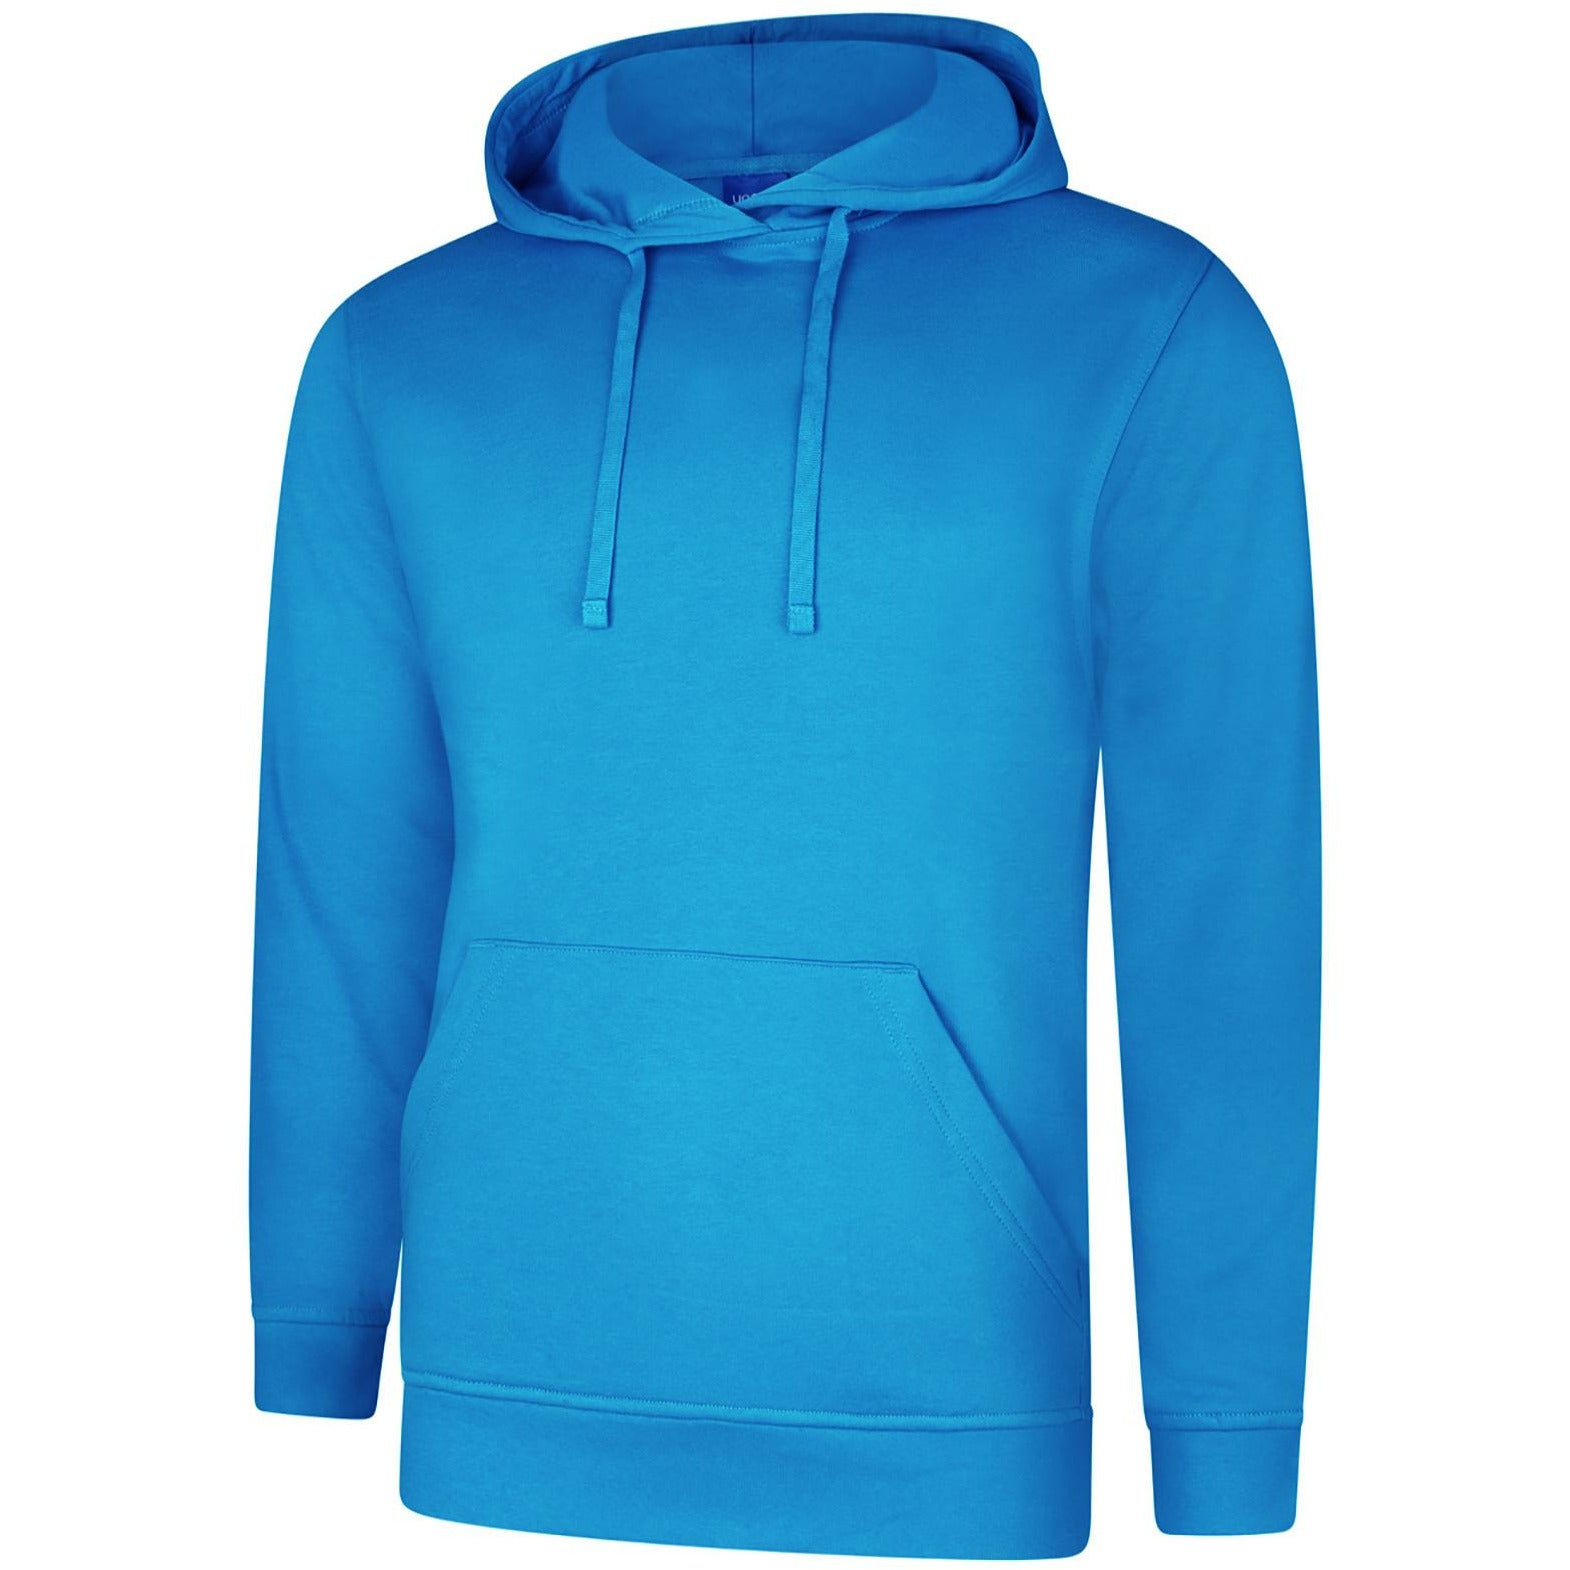 Deluxe Hooded Sweatshirt (L - 2XL) Royal Blue